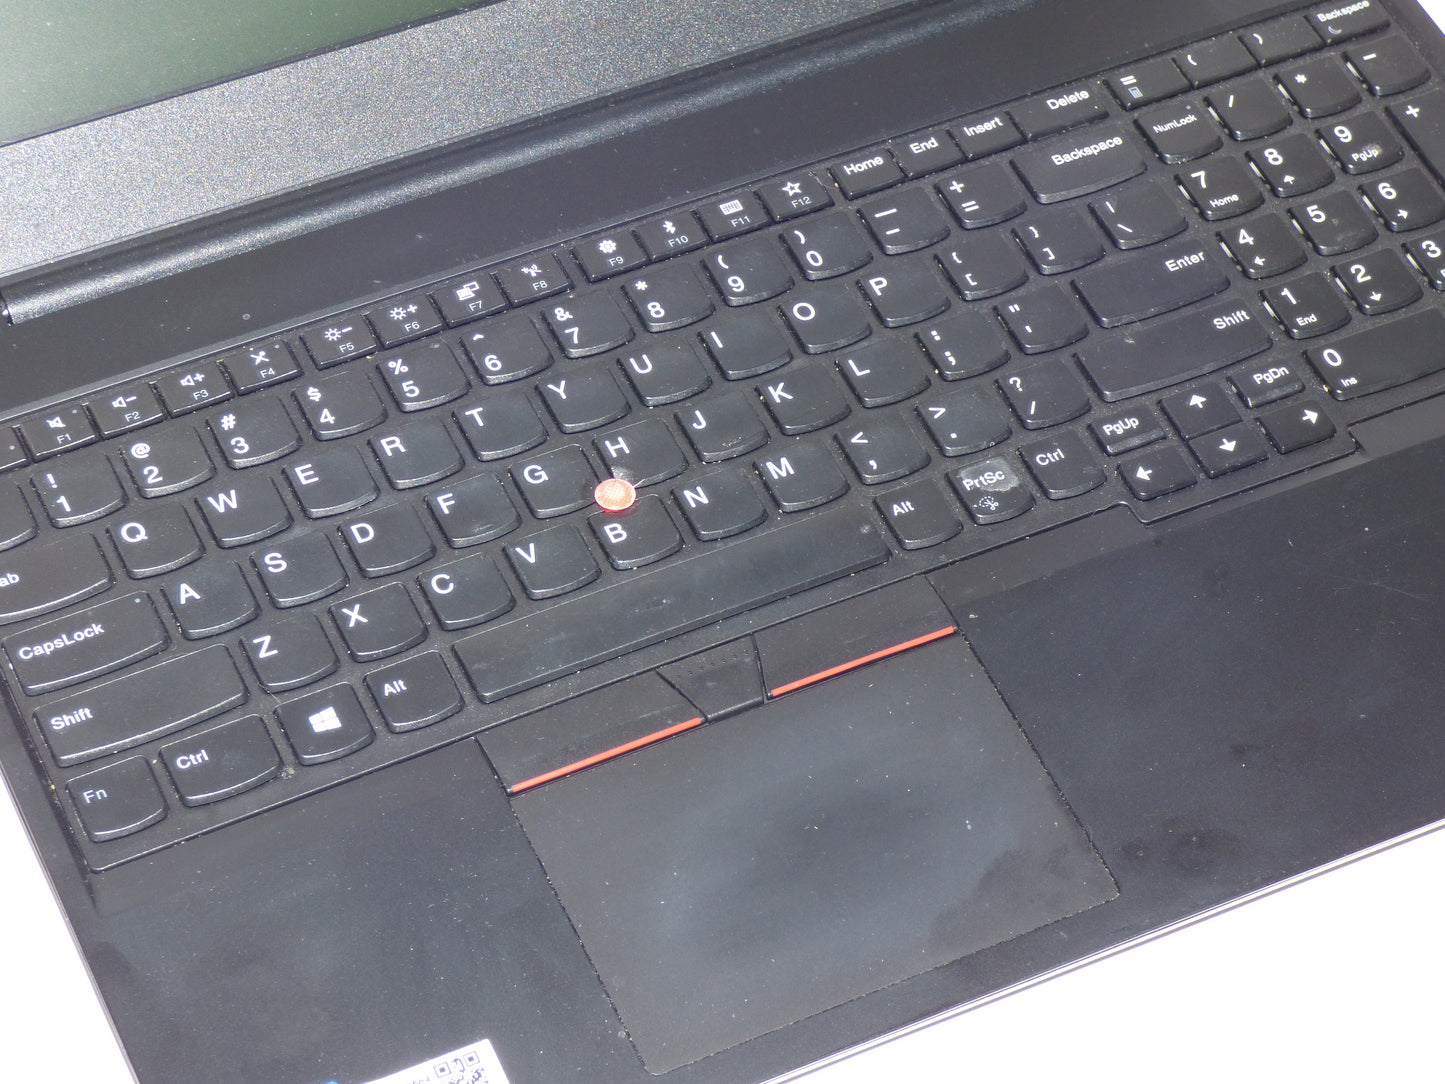 lenovo thinkpad e590 keyboard and touchpad closeup